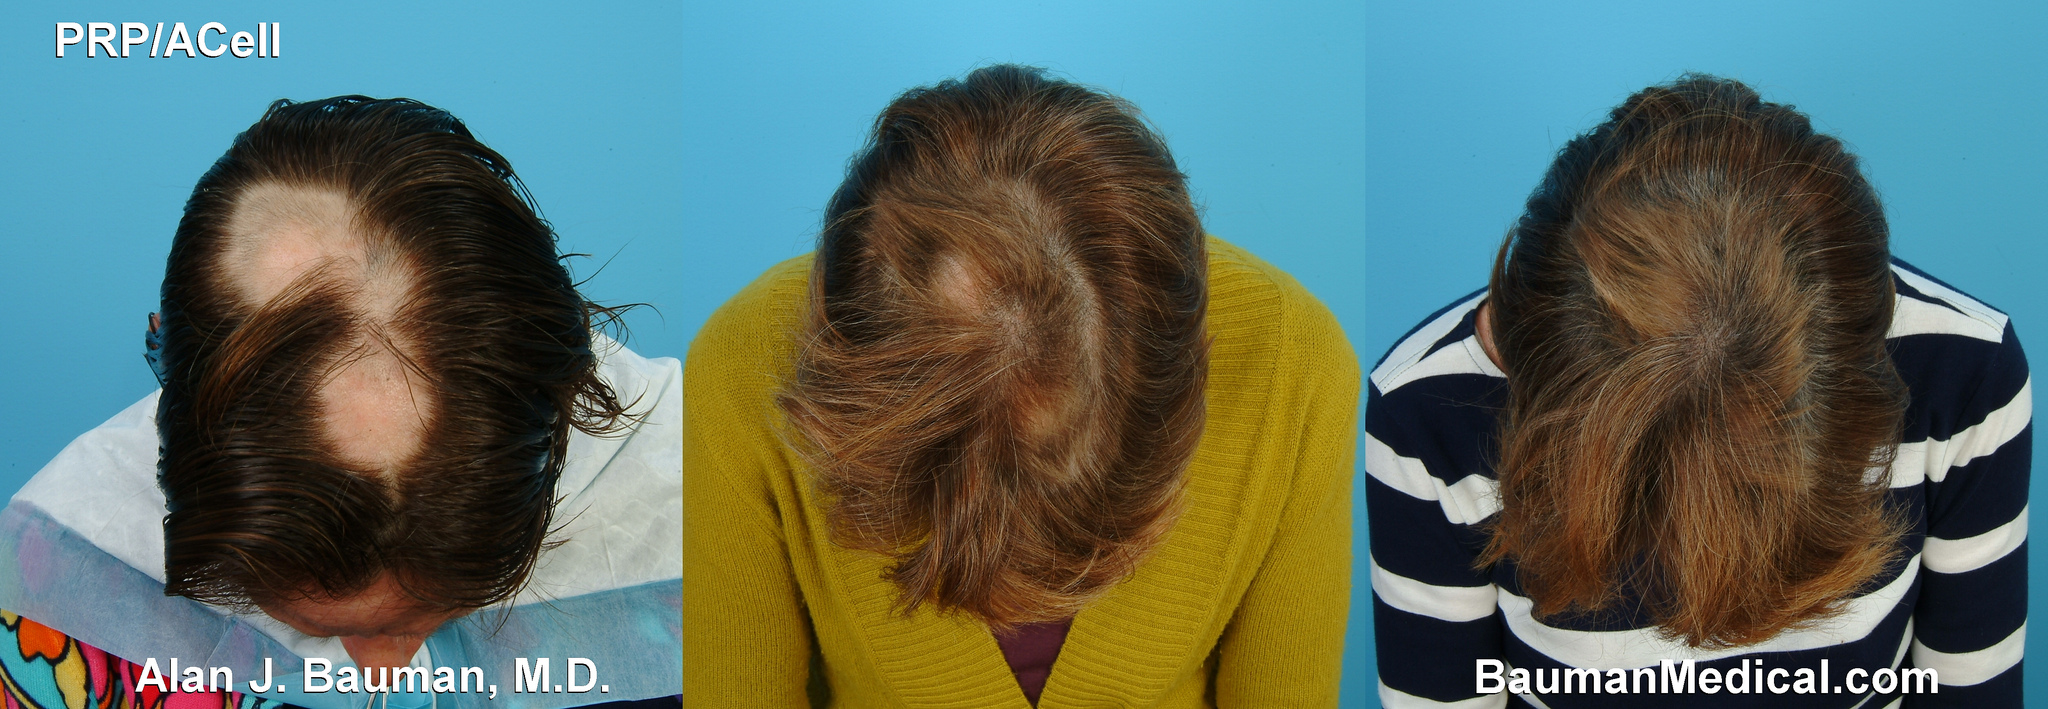 PRP Hair Regrowth - Alopecia Areata